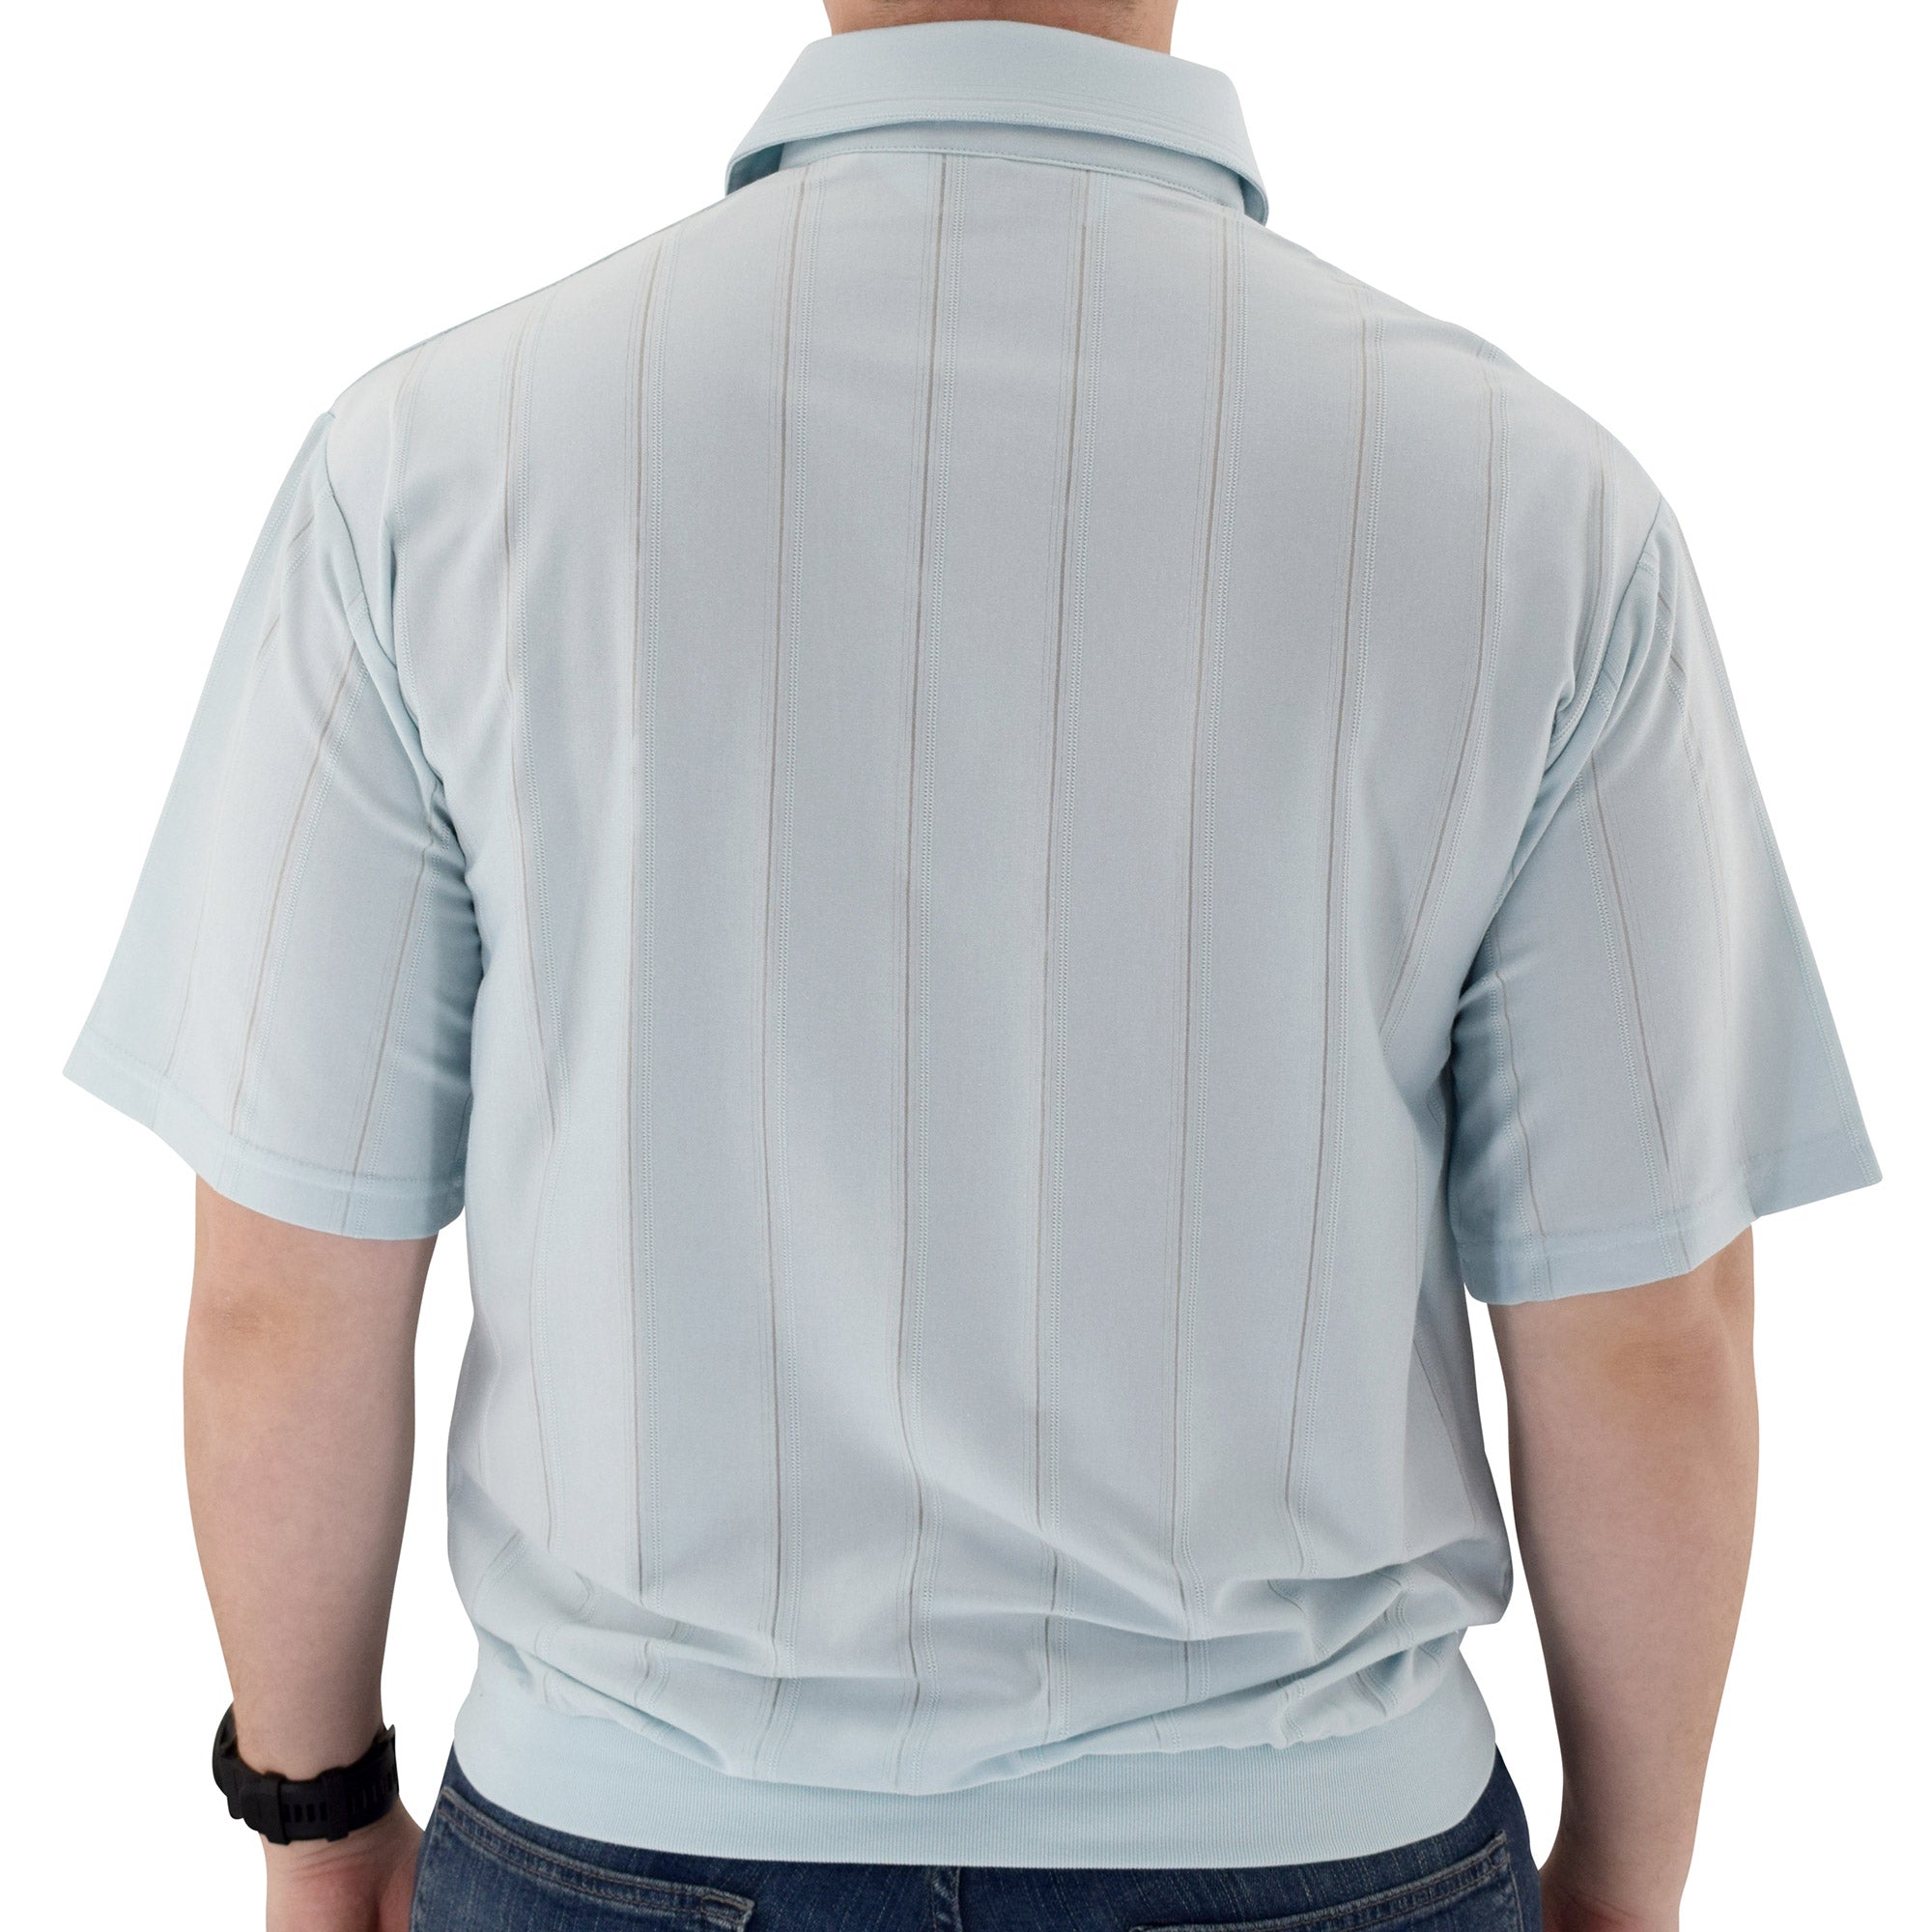 Big and Tall Tone on Tone Textured Knit Short Sleeve Banded Bottom Shirt - 6010-16BT - Light Blue - theflagshirt